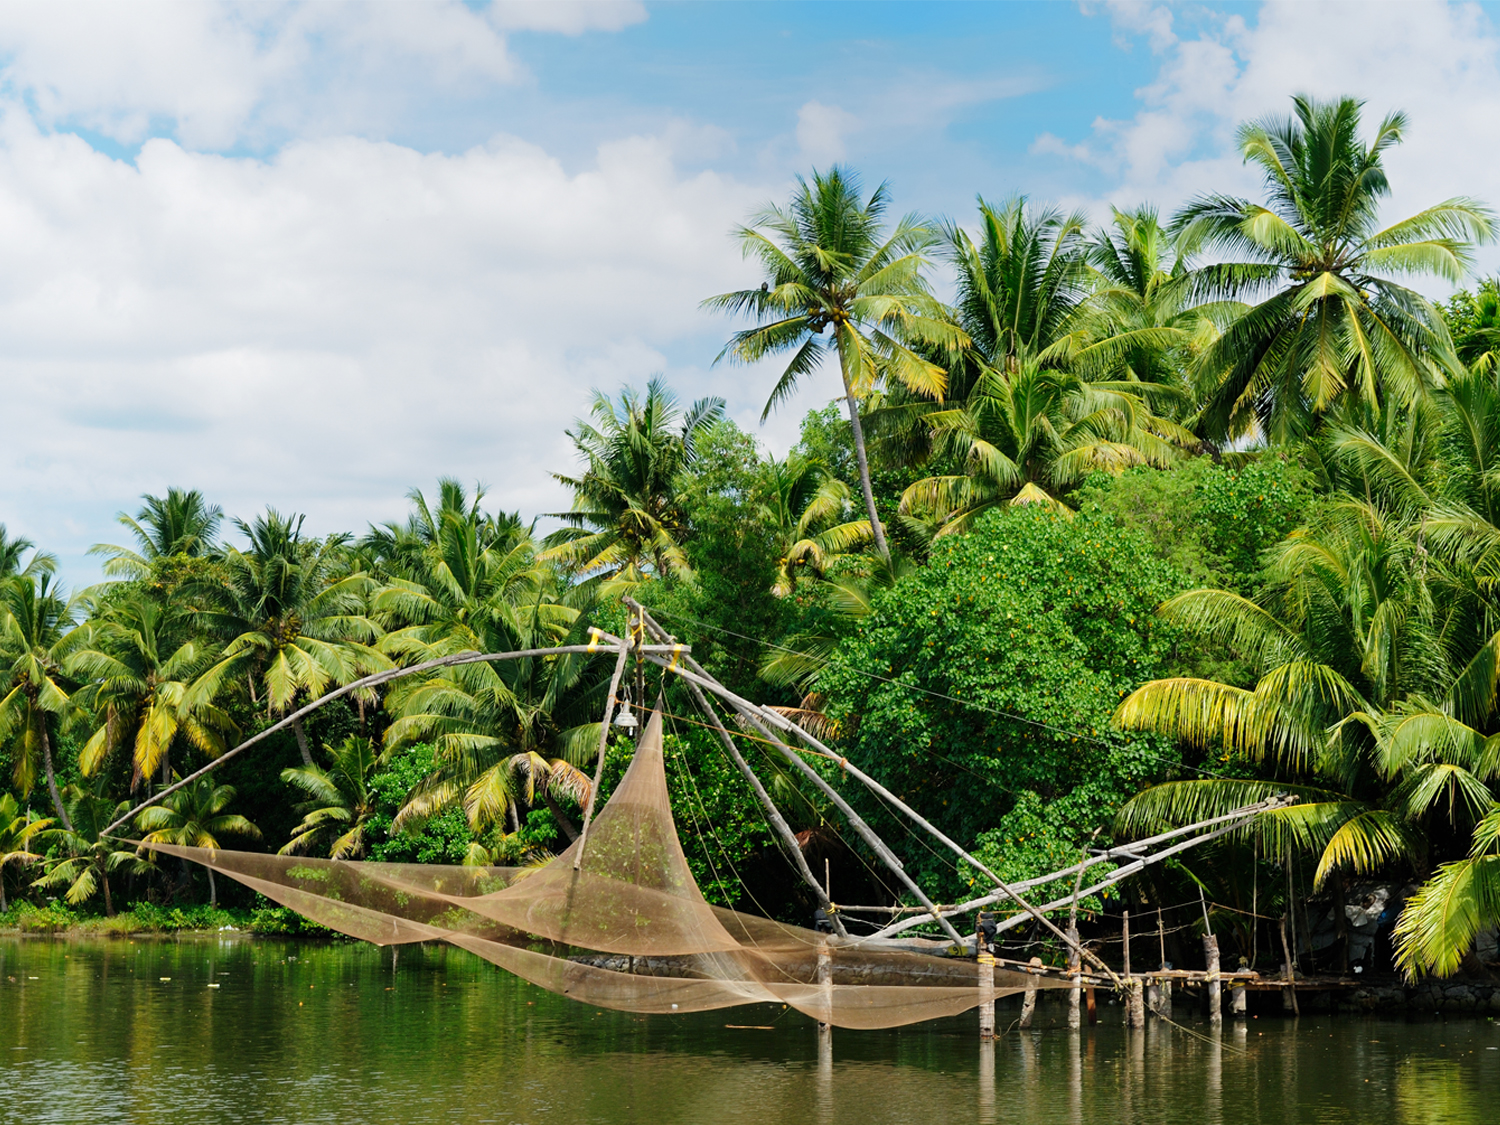 Day 12 - Kerala backwaters